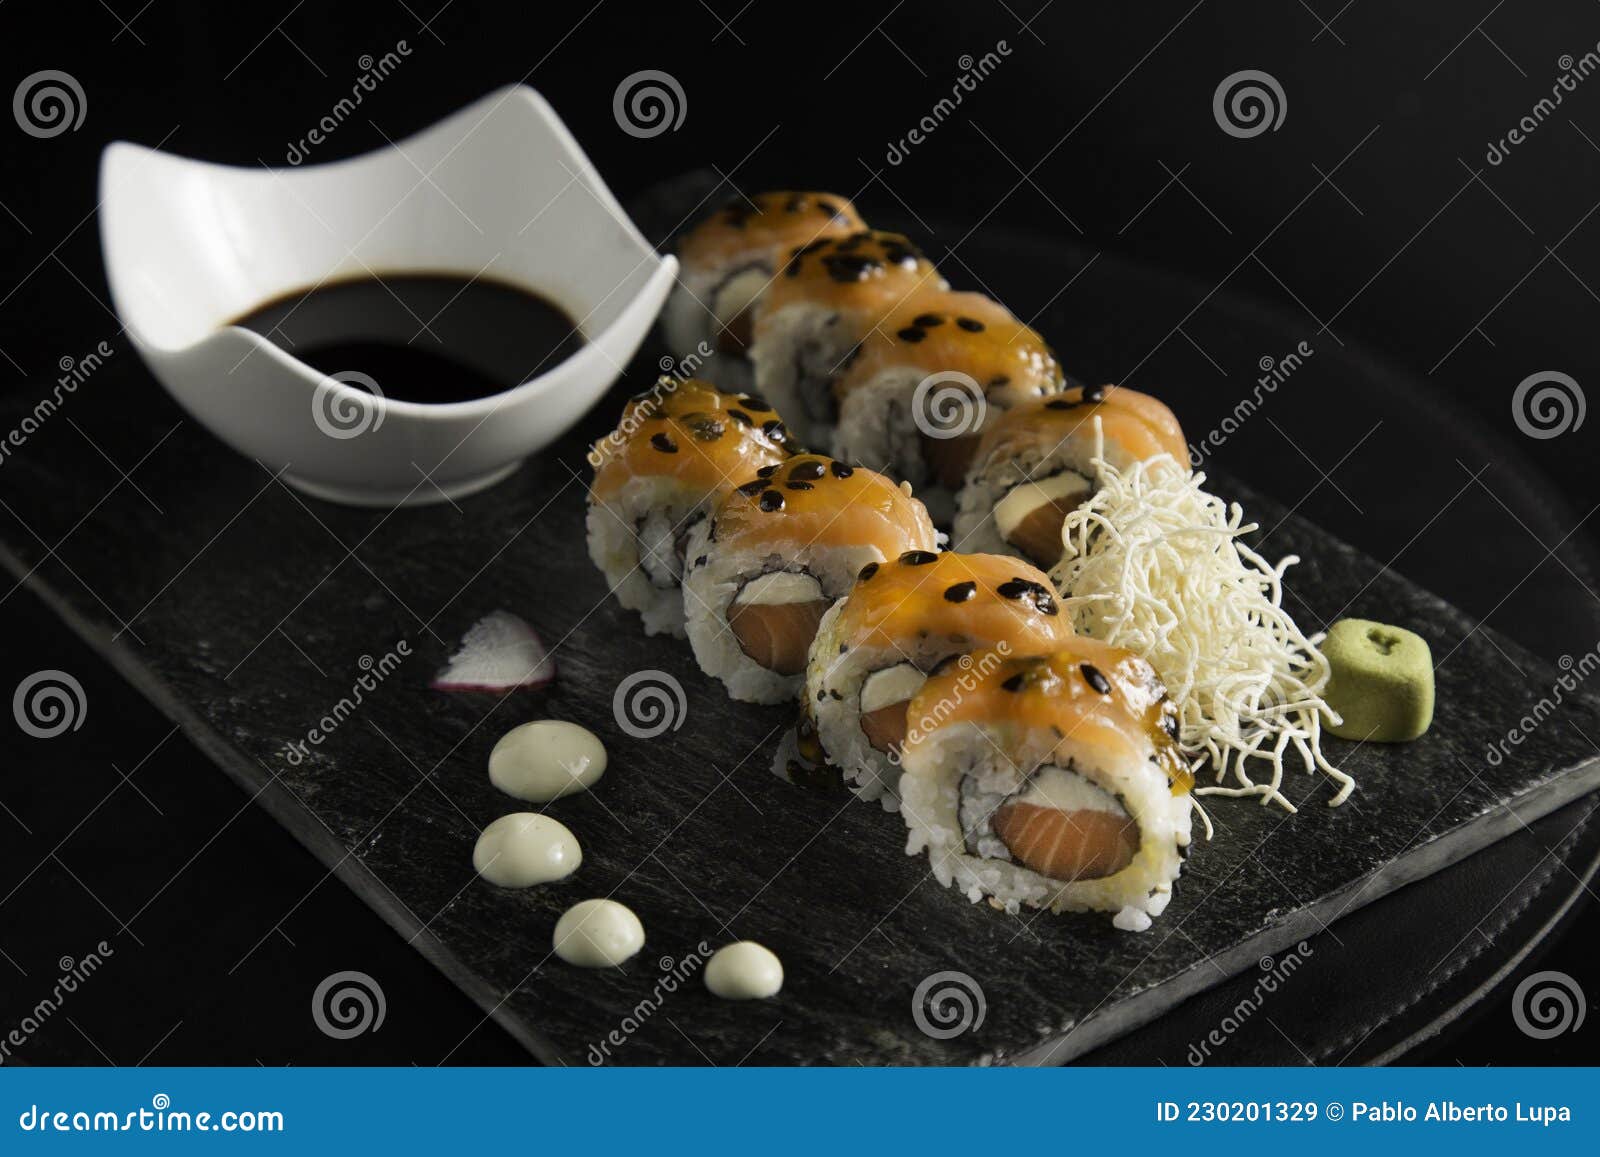 pasion fruit gourmet plate of sushi